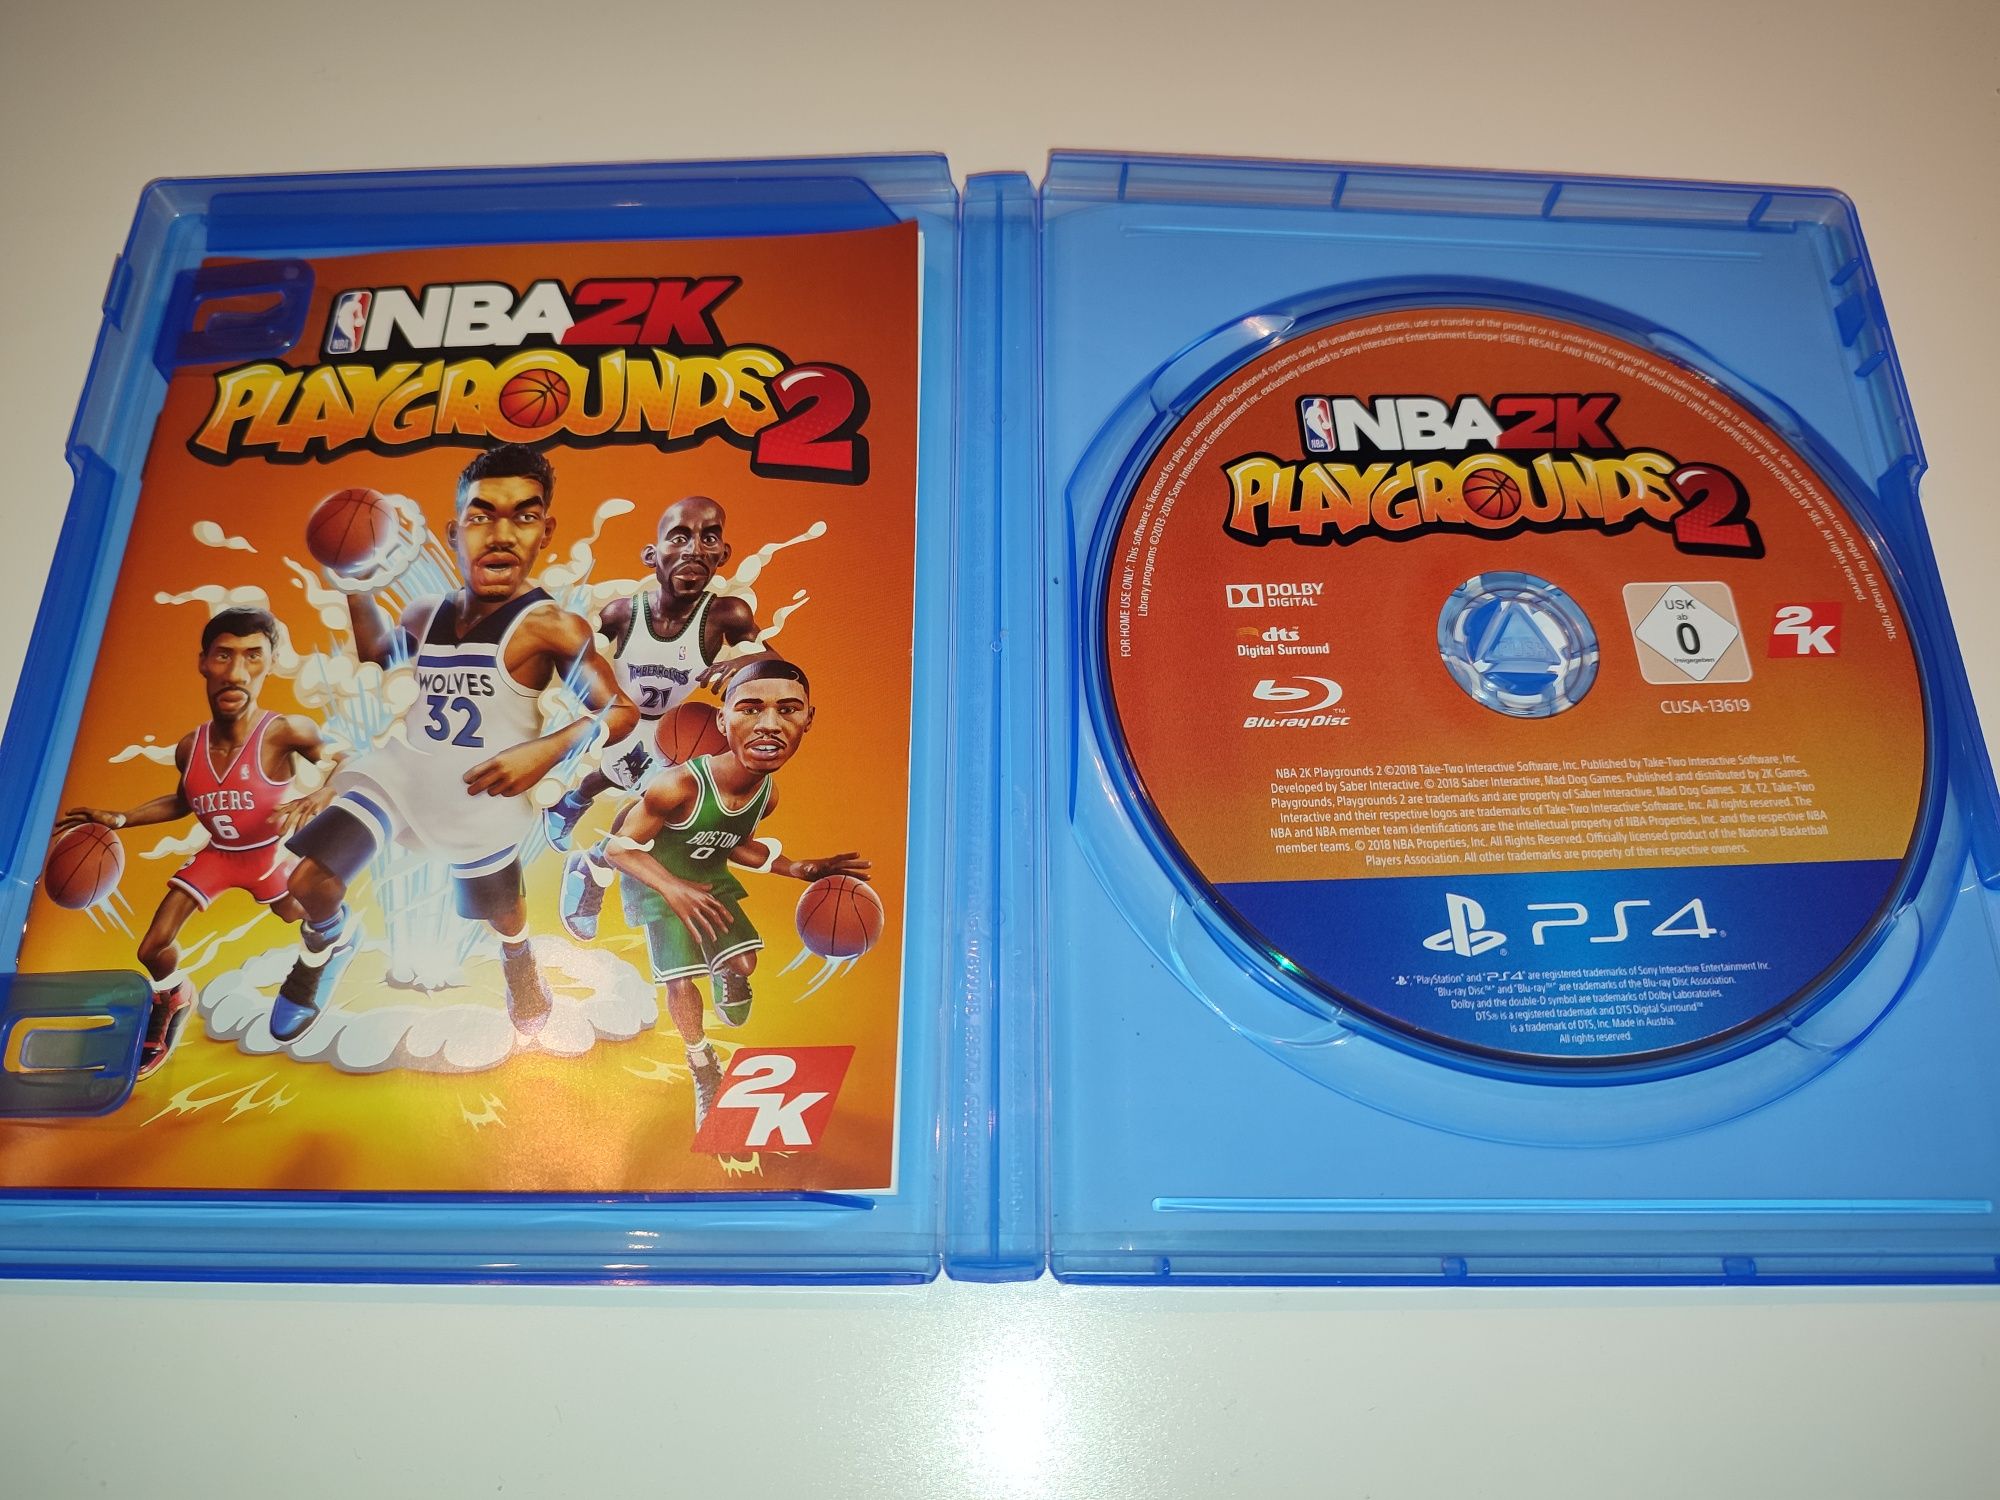 Gra Ps4 NBA 2K Playgrounds 2 II gry PlayStation 4 Koszykówka NBA 23